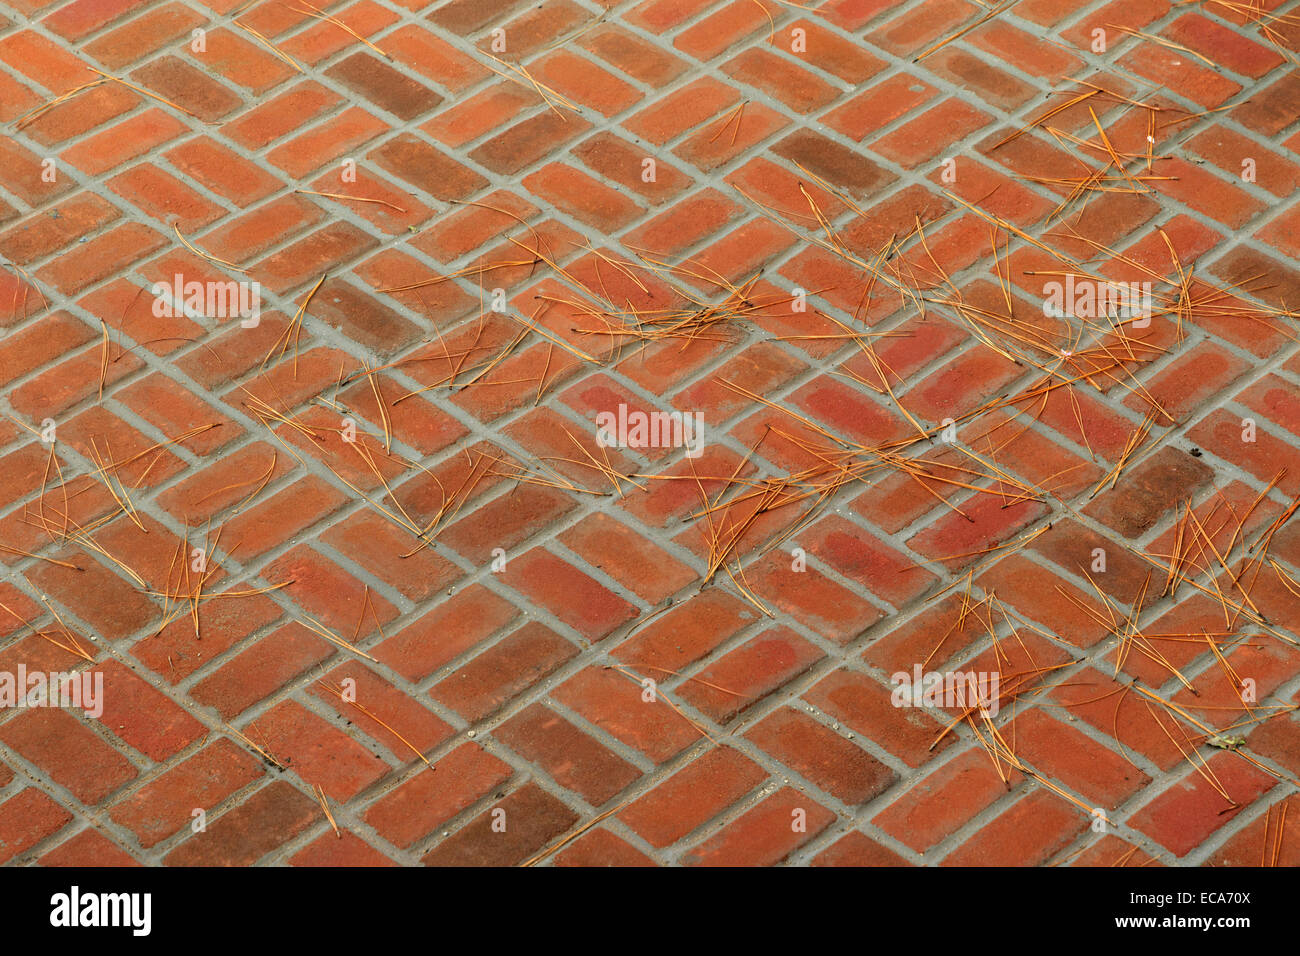 Brick floor in box pattern with fallen pine needles Stock Photo